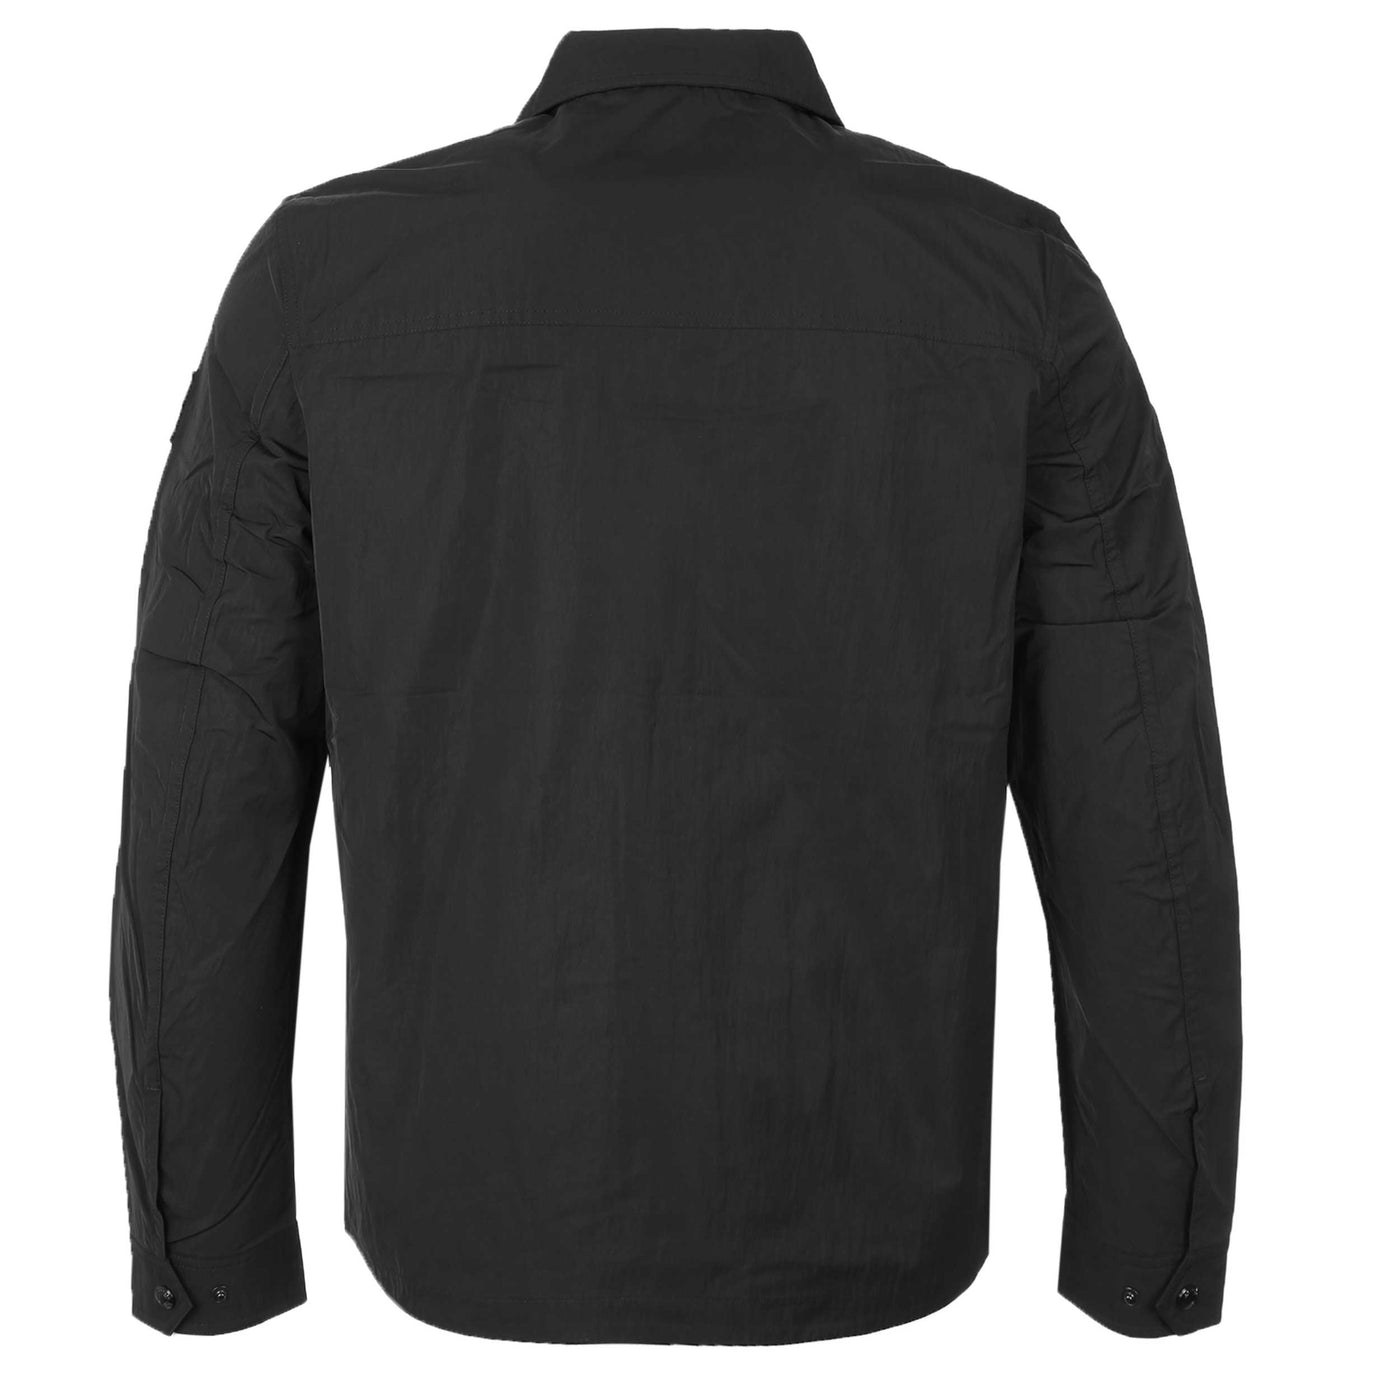 Belstaff Staunton Overshirt in Black Back